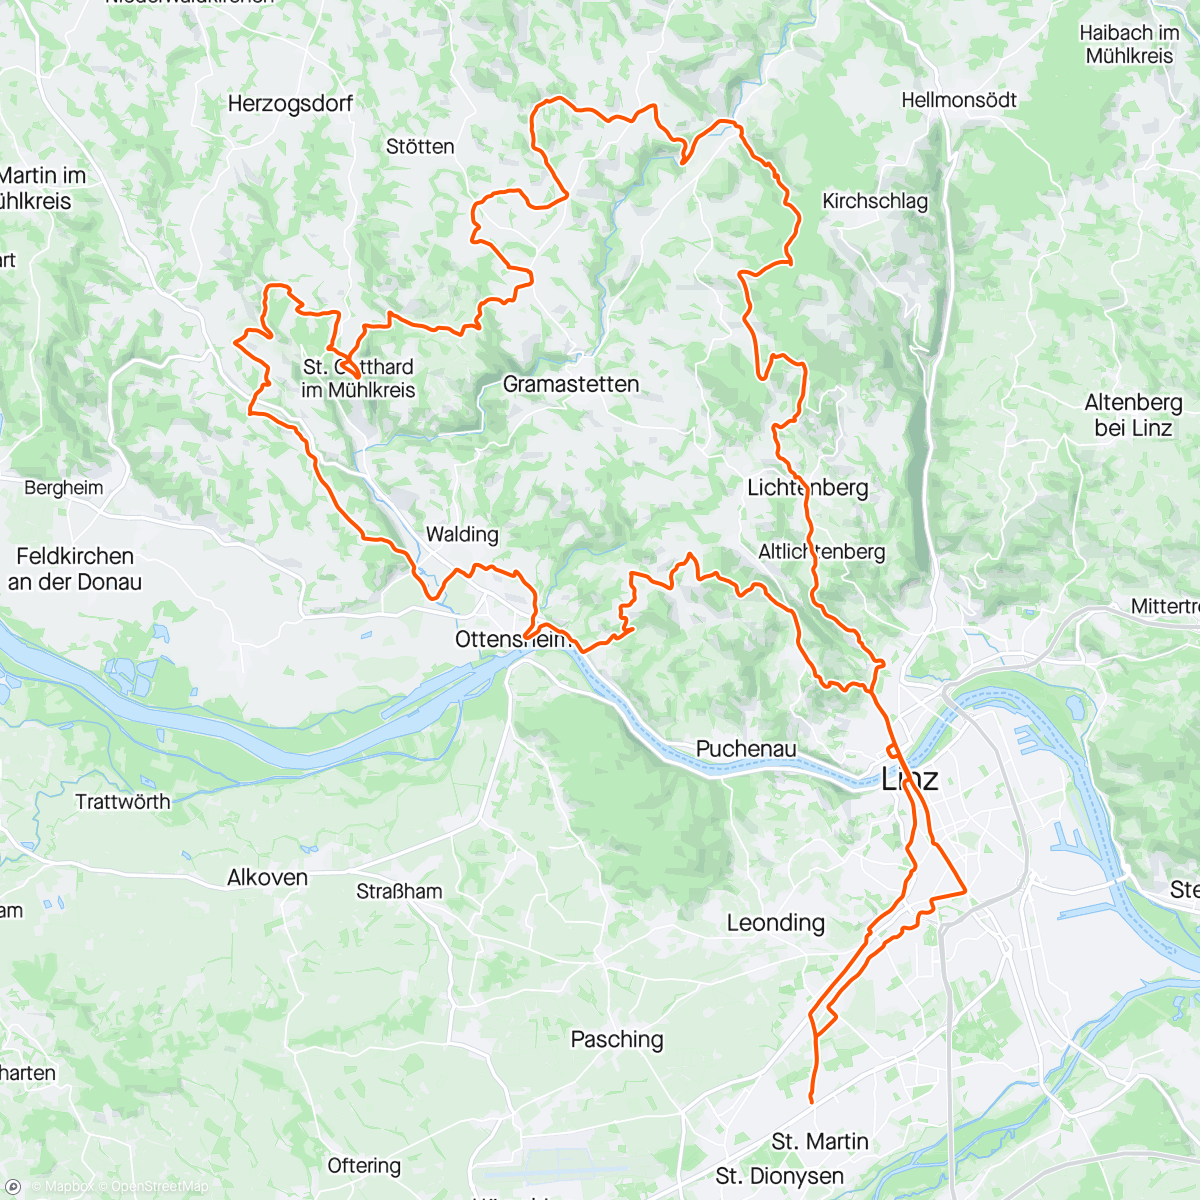 「Granitland Süd A」活動的地圖